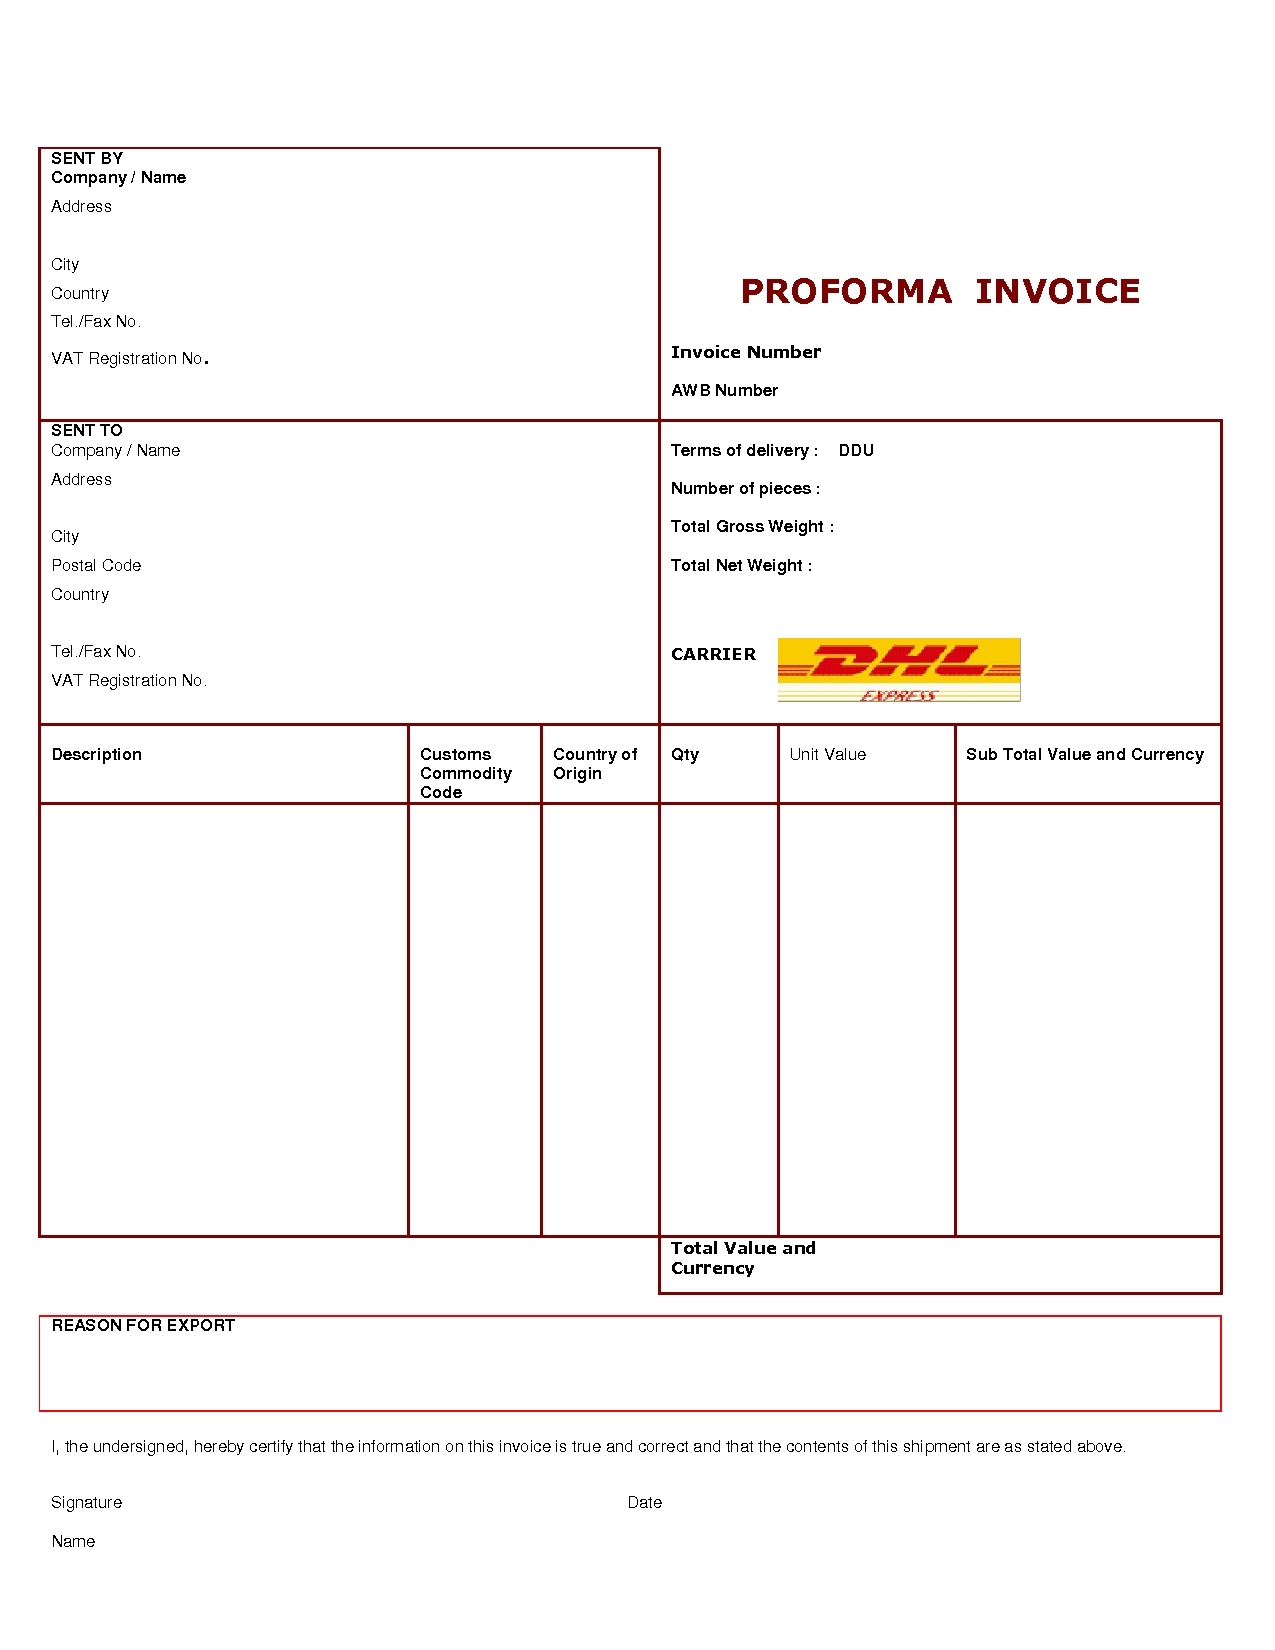 dhl proforma invoice dhl proforma invoice template invoice template free 2016 1275 X 1650